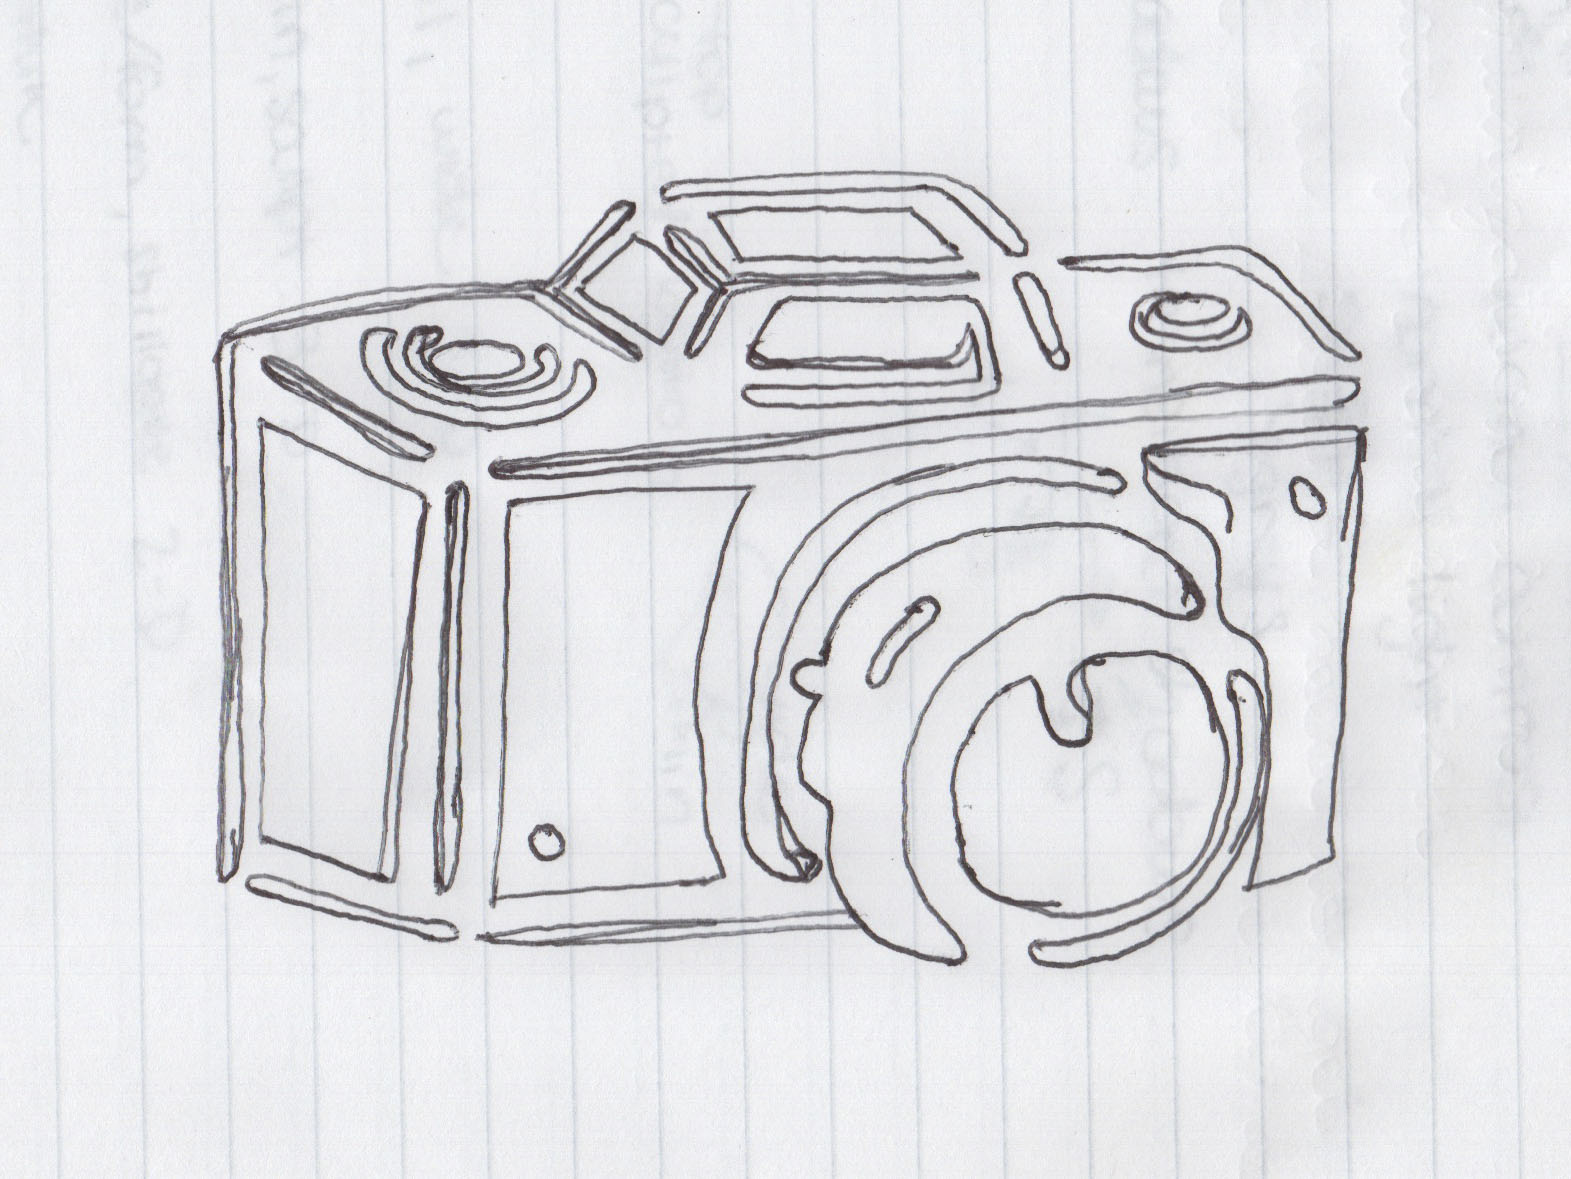 [Insert Creative Title Here]: Camera Sketches